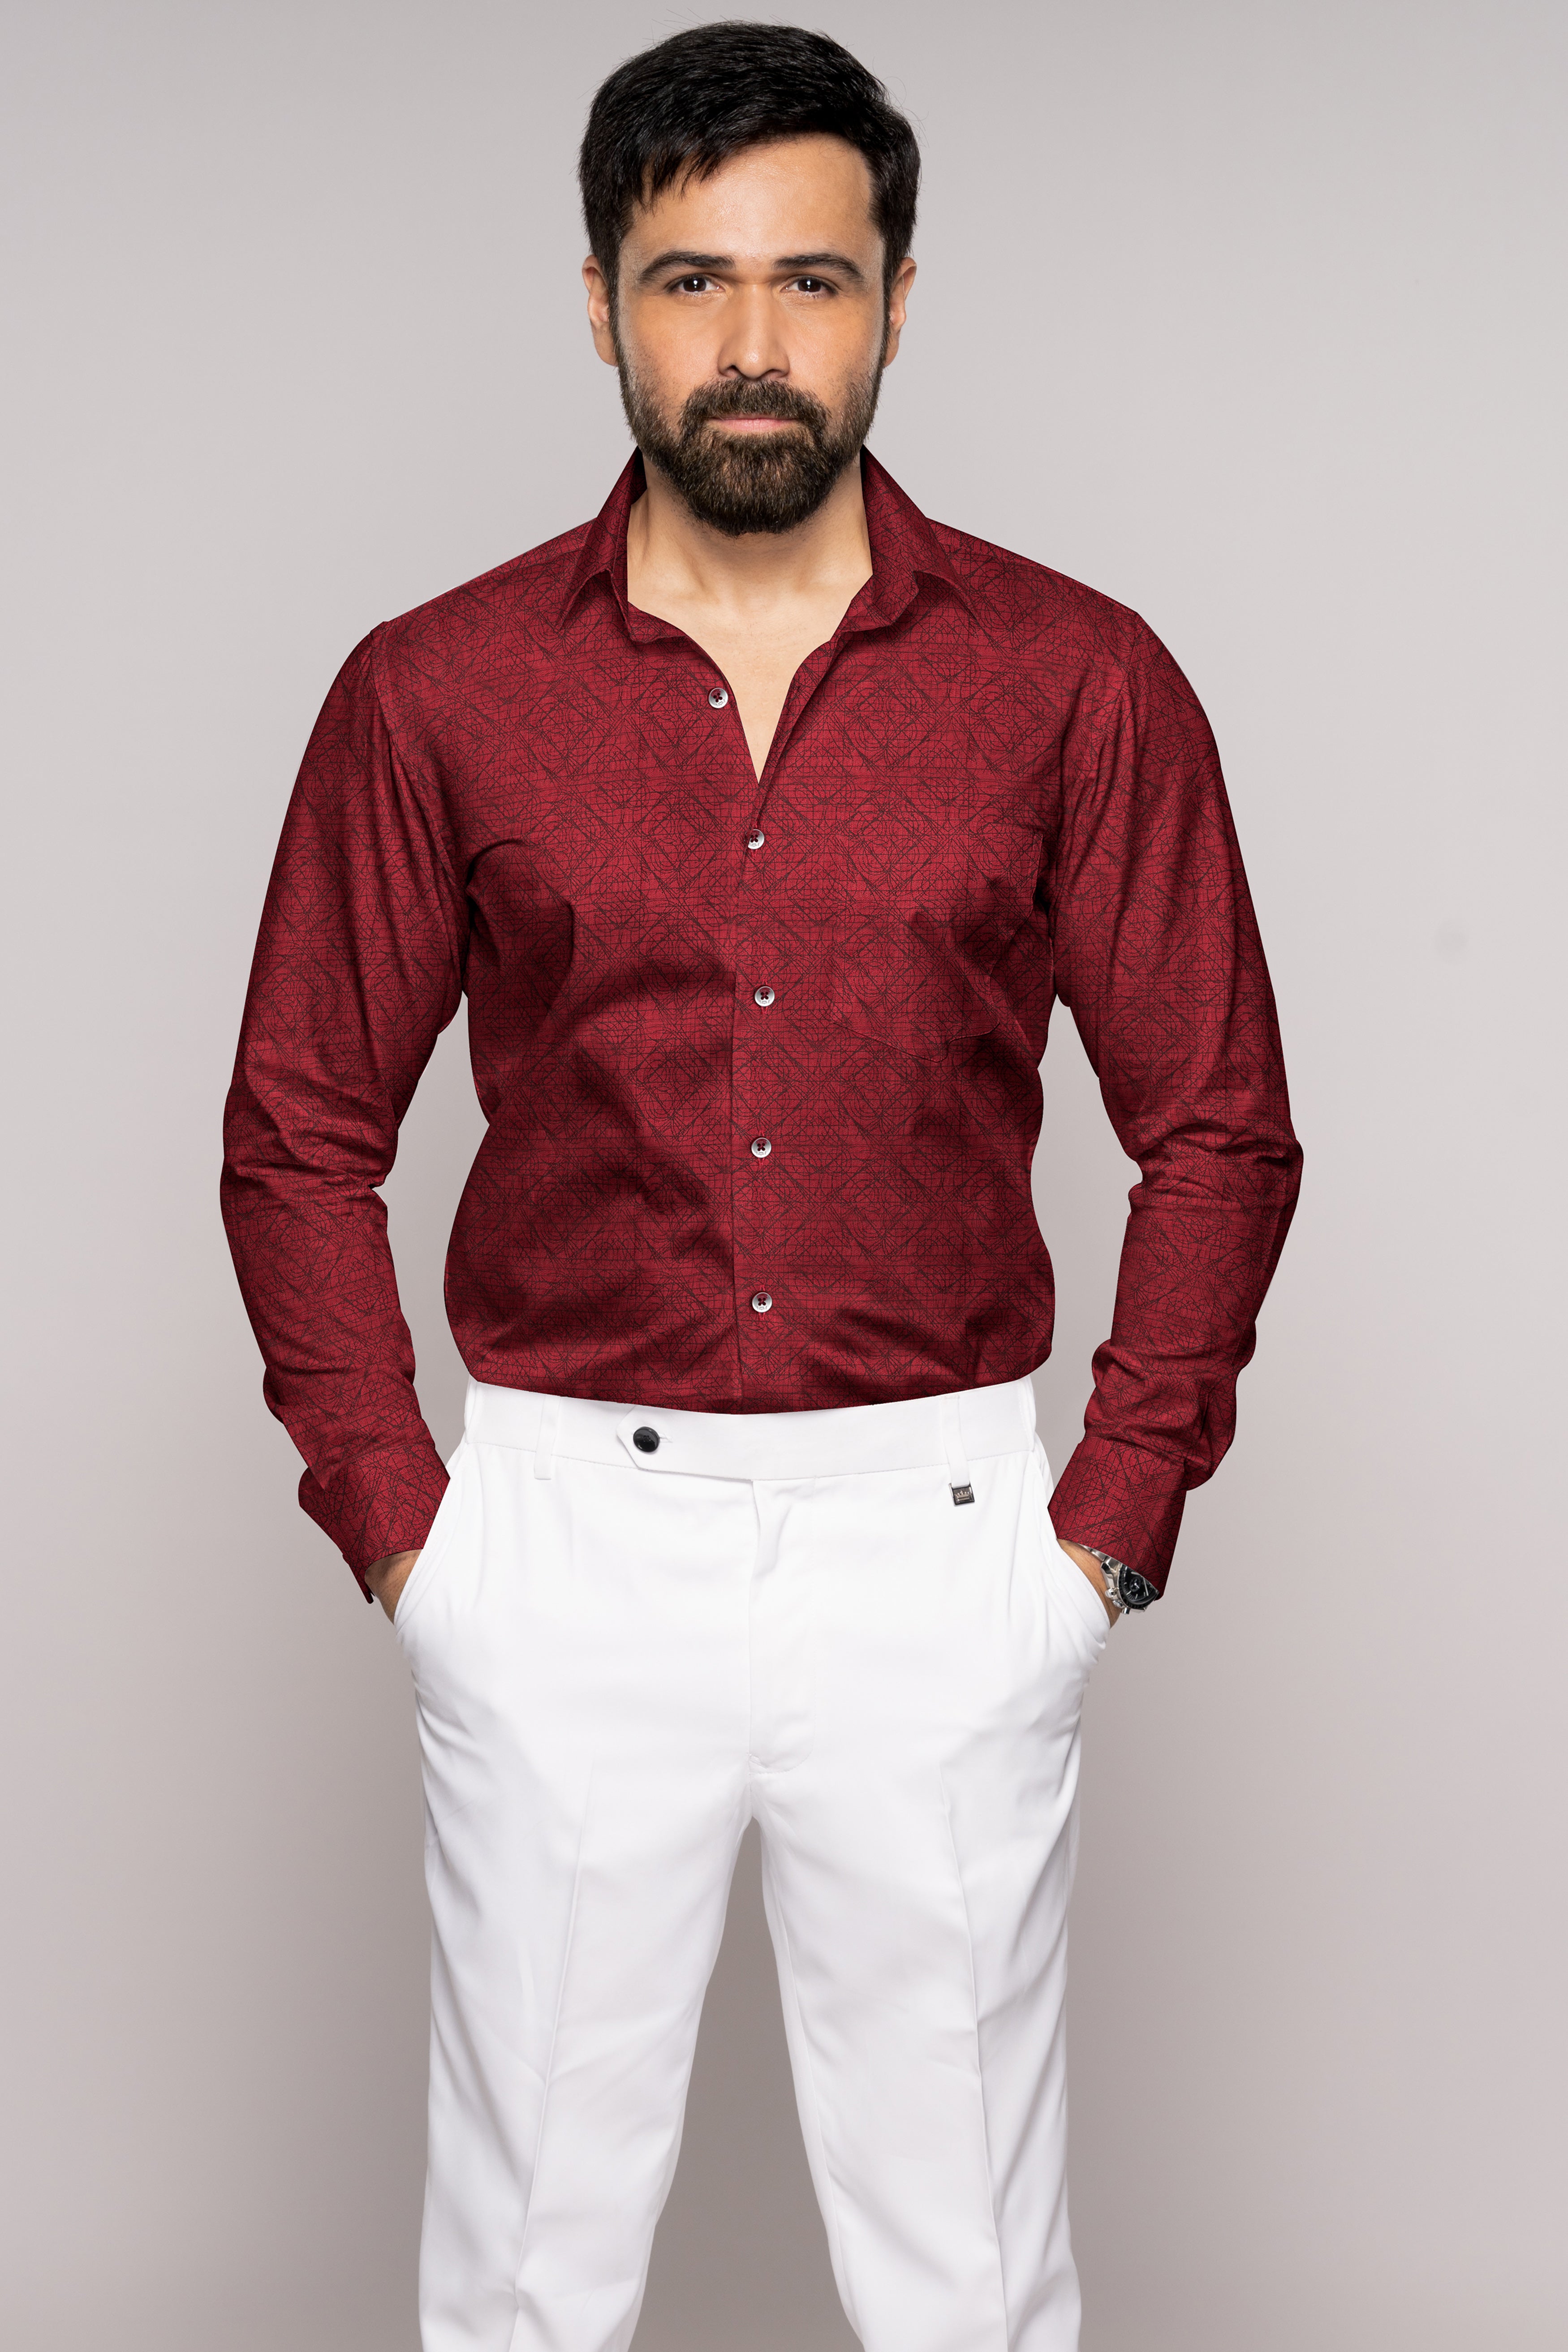 Sanguine Red and Black Jacquard Textured Premium Giza Cotton Shirt